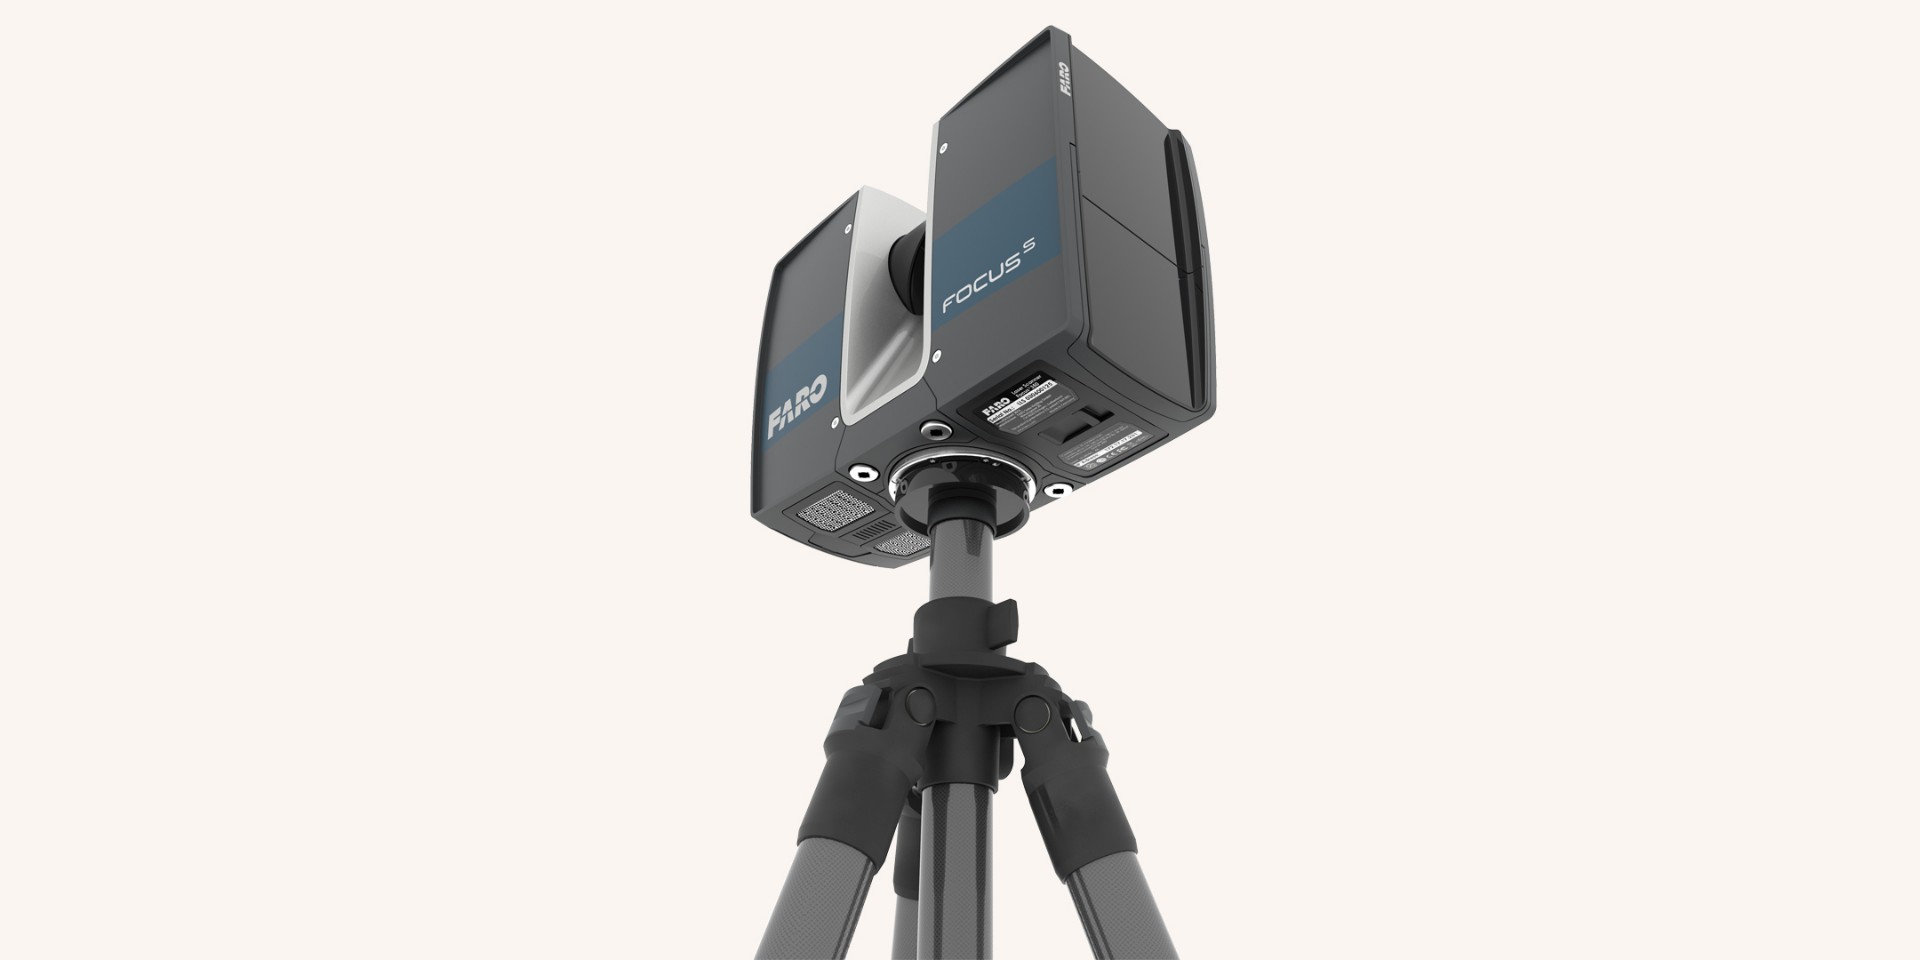 Фото 3D сканер FARO Laser Scanner Focus S150